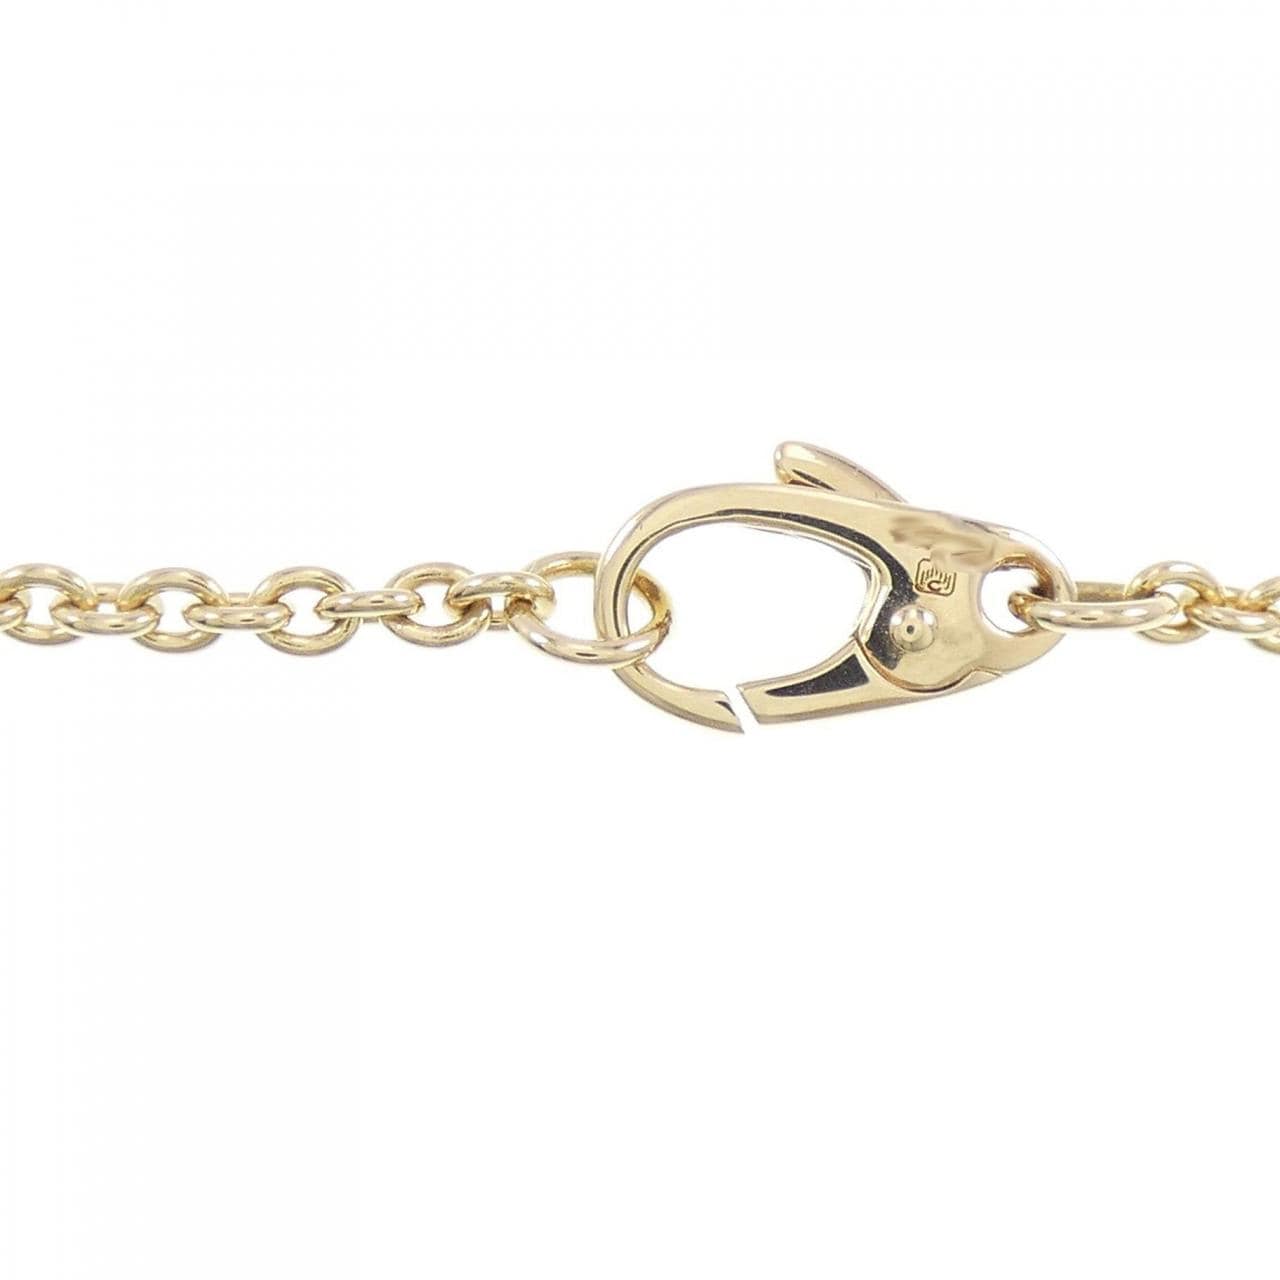 Cartier Baby Trinity Ball Necklace